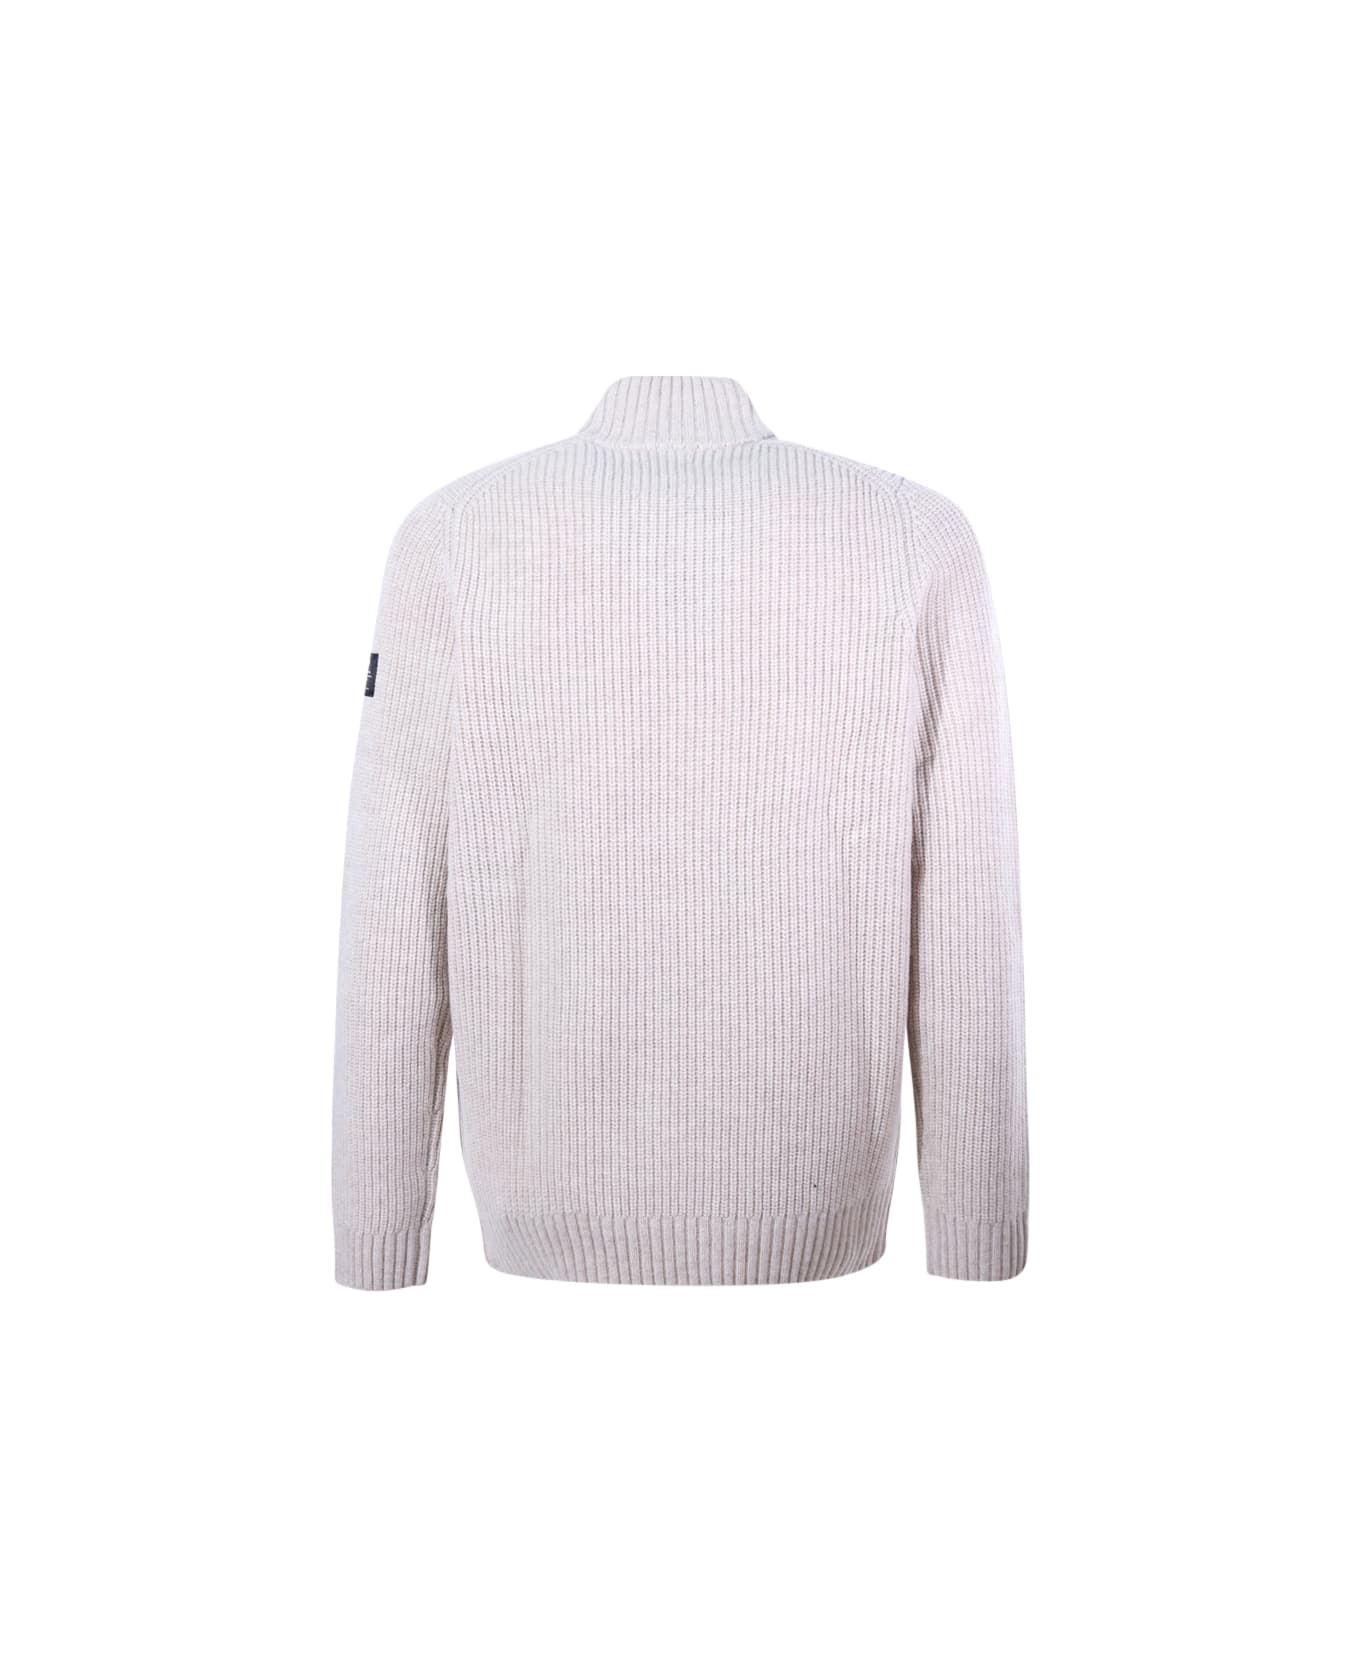 Ecoalf Knit Sweatshirt - Panna